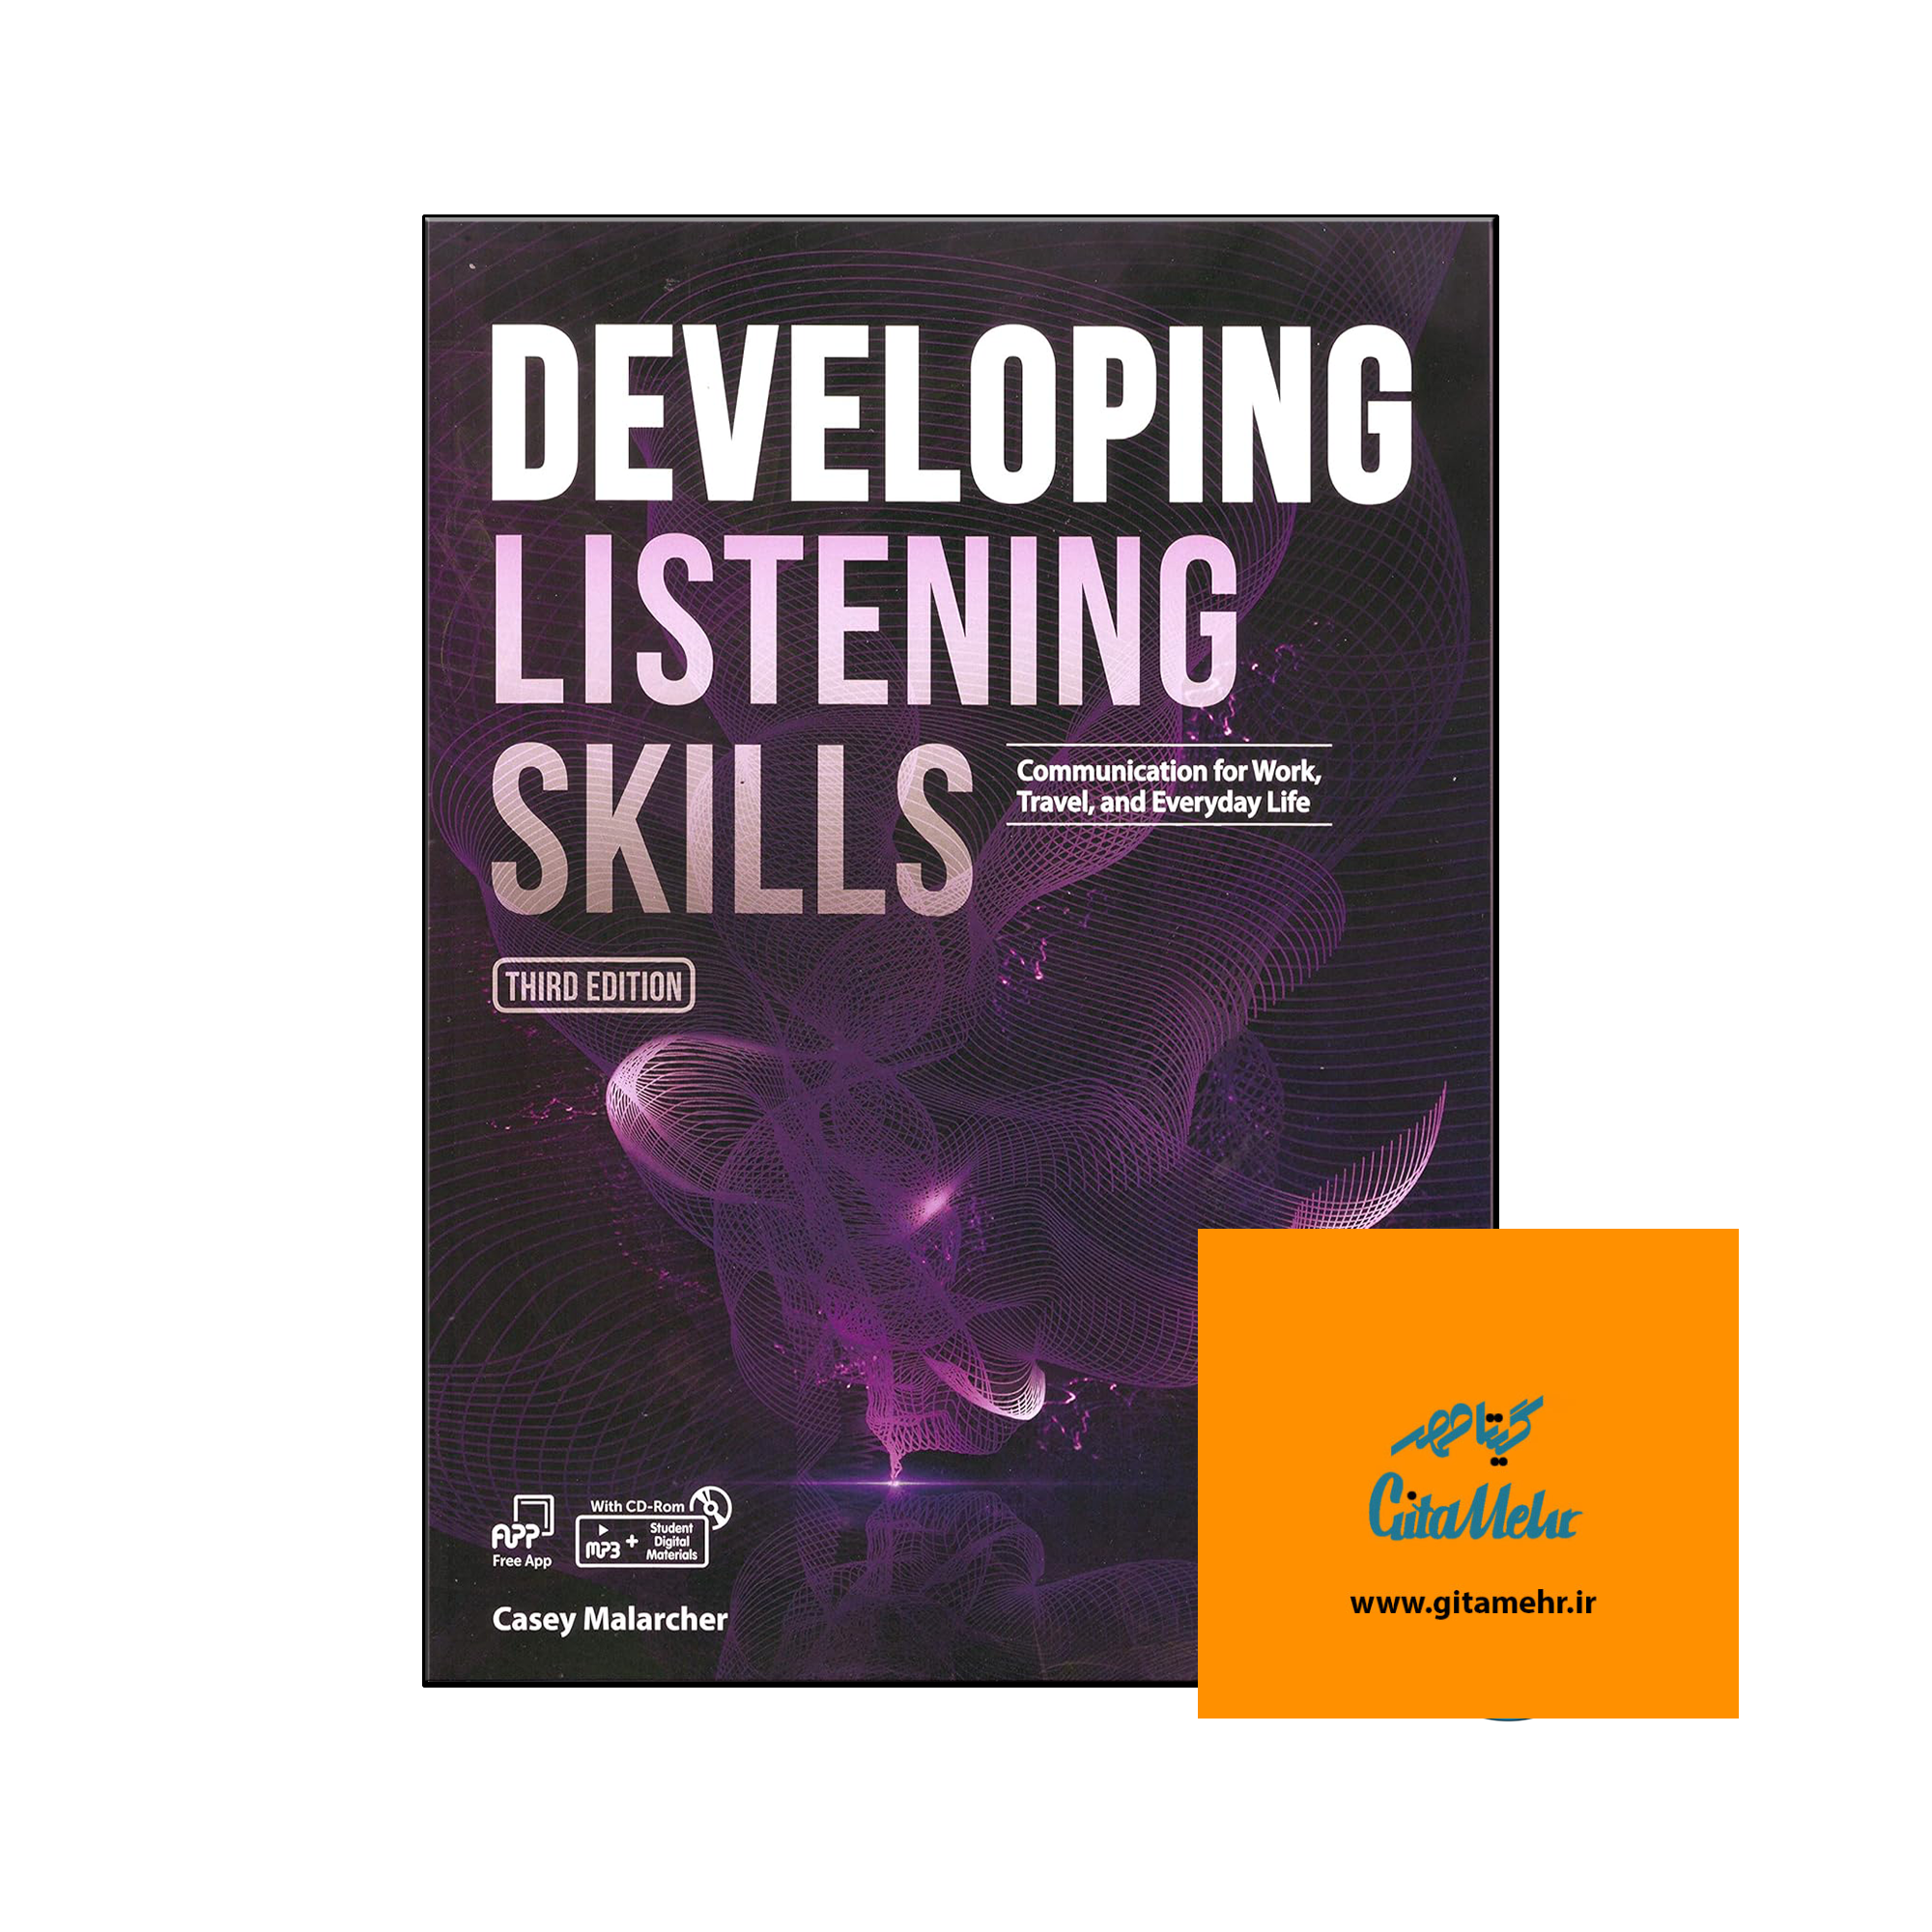 daa9d8aad8a7d8a8 developing listening skills 3 3rd 65ec941899aa3